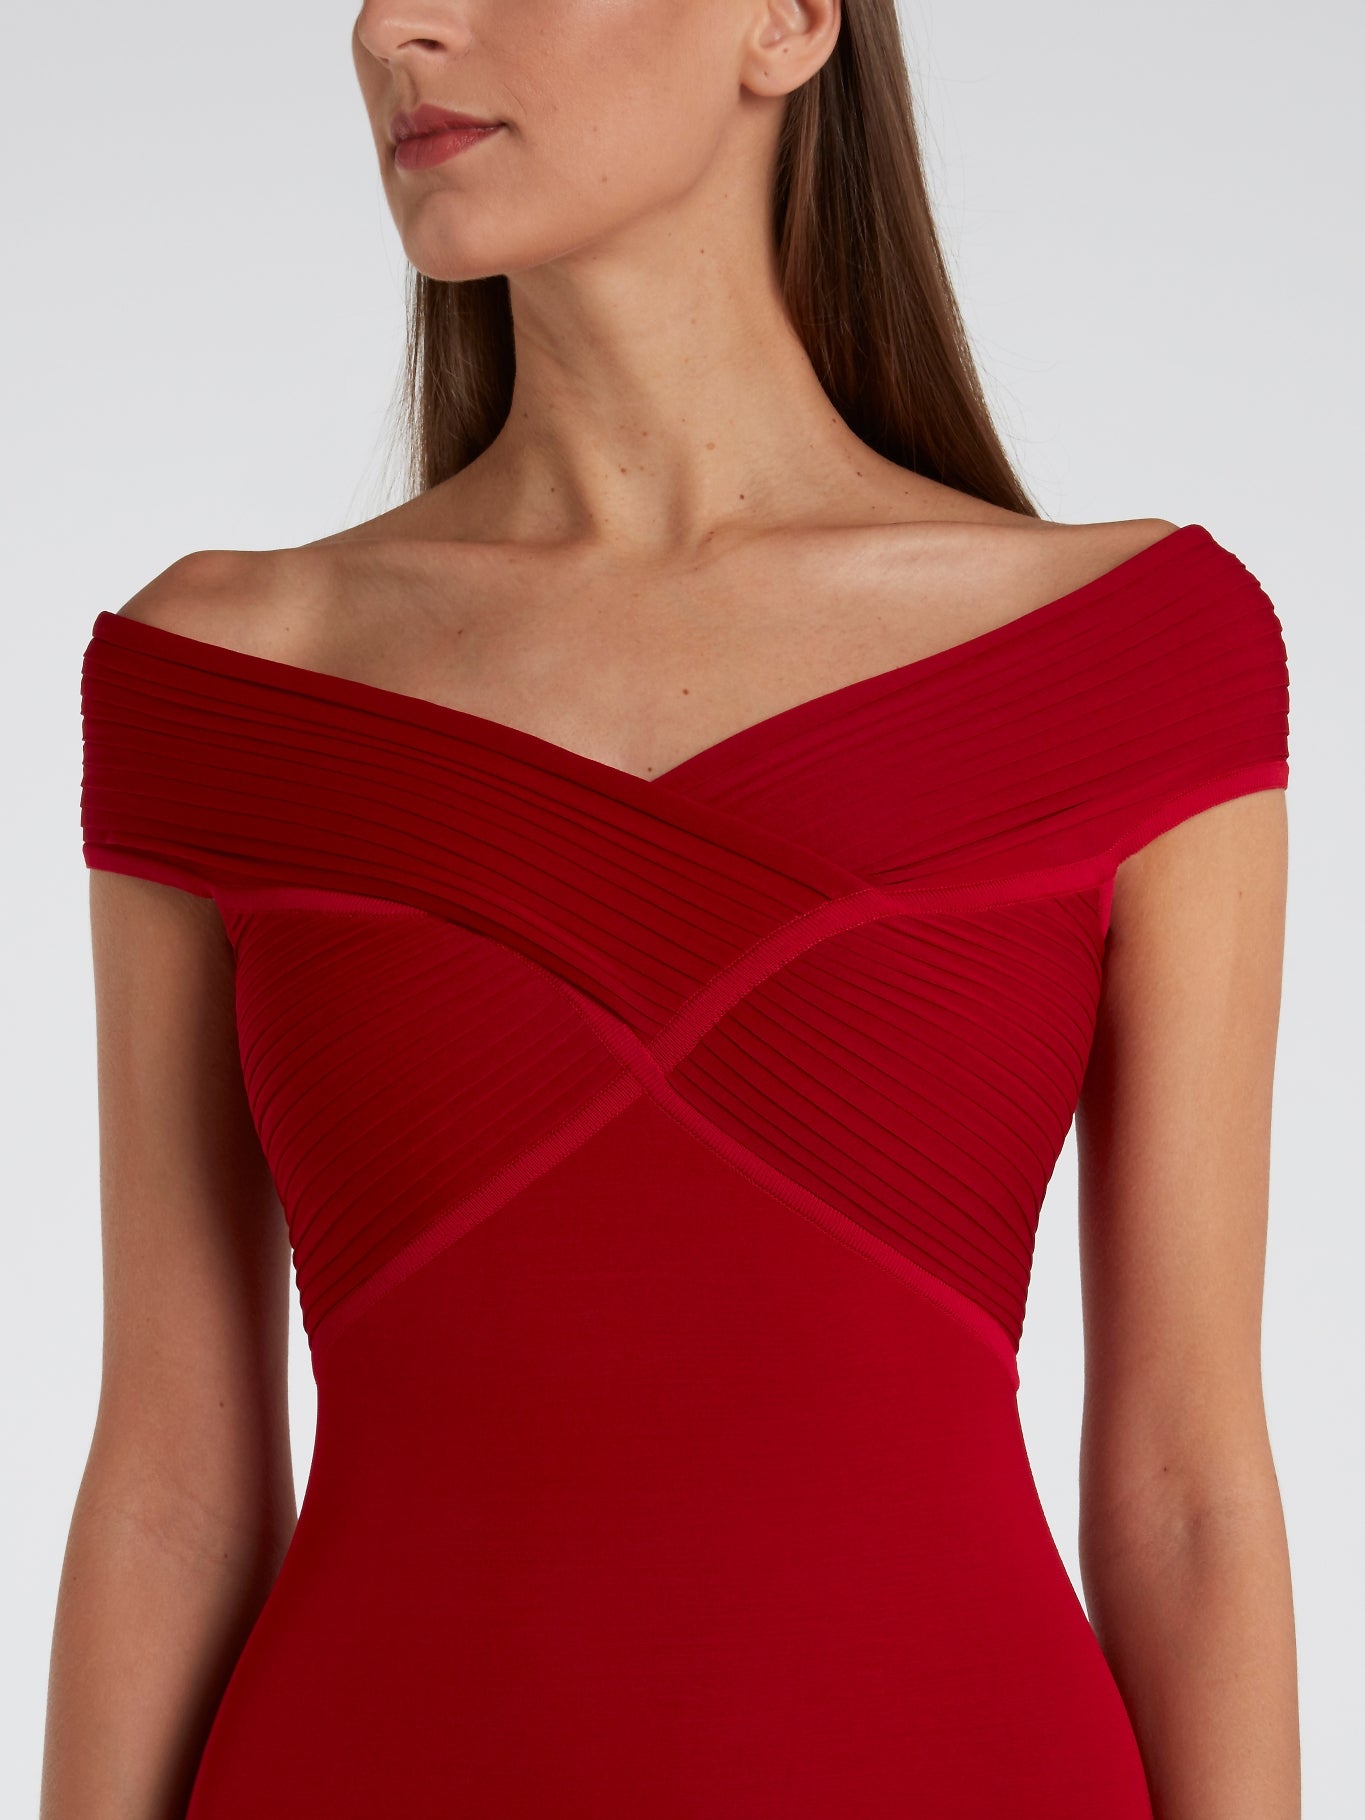 Red Off-The-Shoulder Maxi Dress